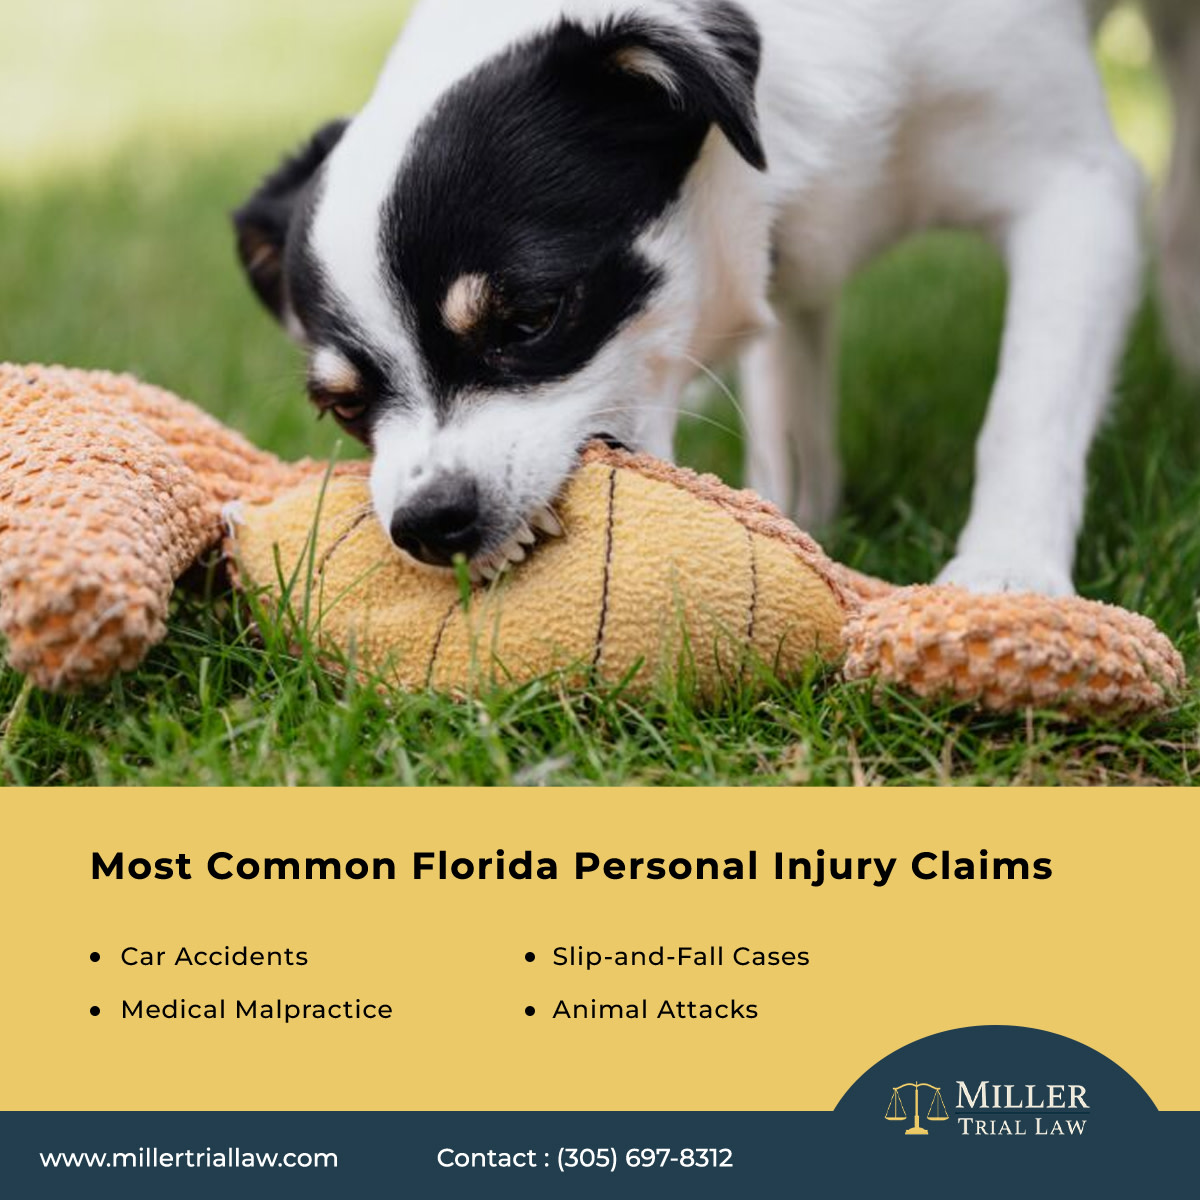 Most Common Florida Personal Injury Claims
VIEW TIPS... millertriallaw.com

#personalinjurylawyer #personalinjuryattorney #piattorney #pilawyer #miami #fortlauderdale #browardcounty #miamidadecounty#miamilawyer #miamiattorney